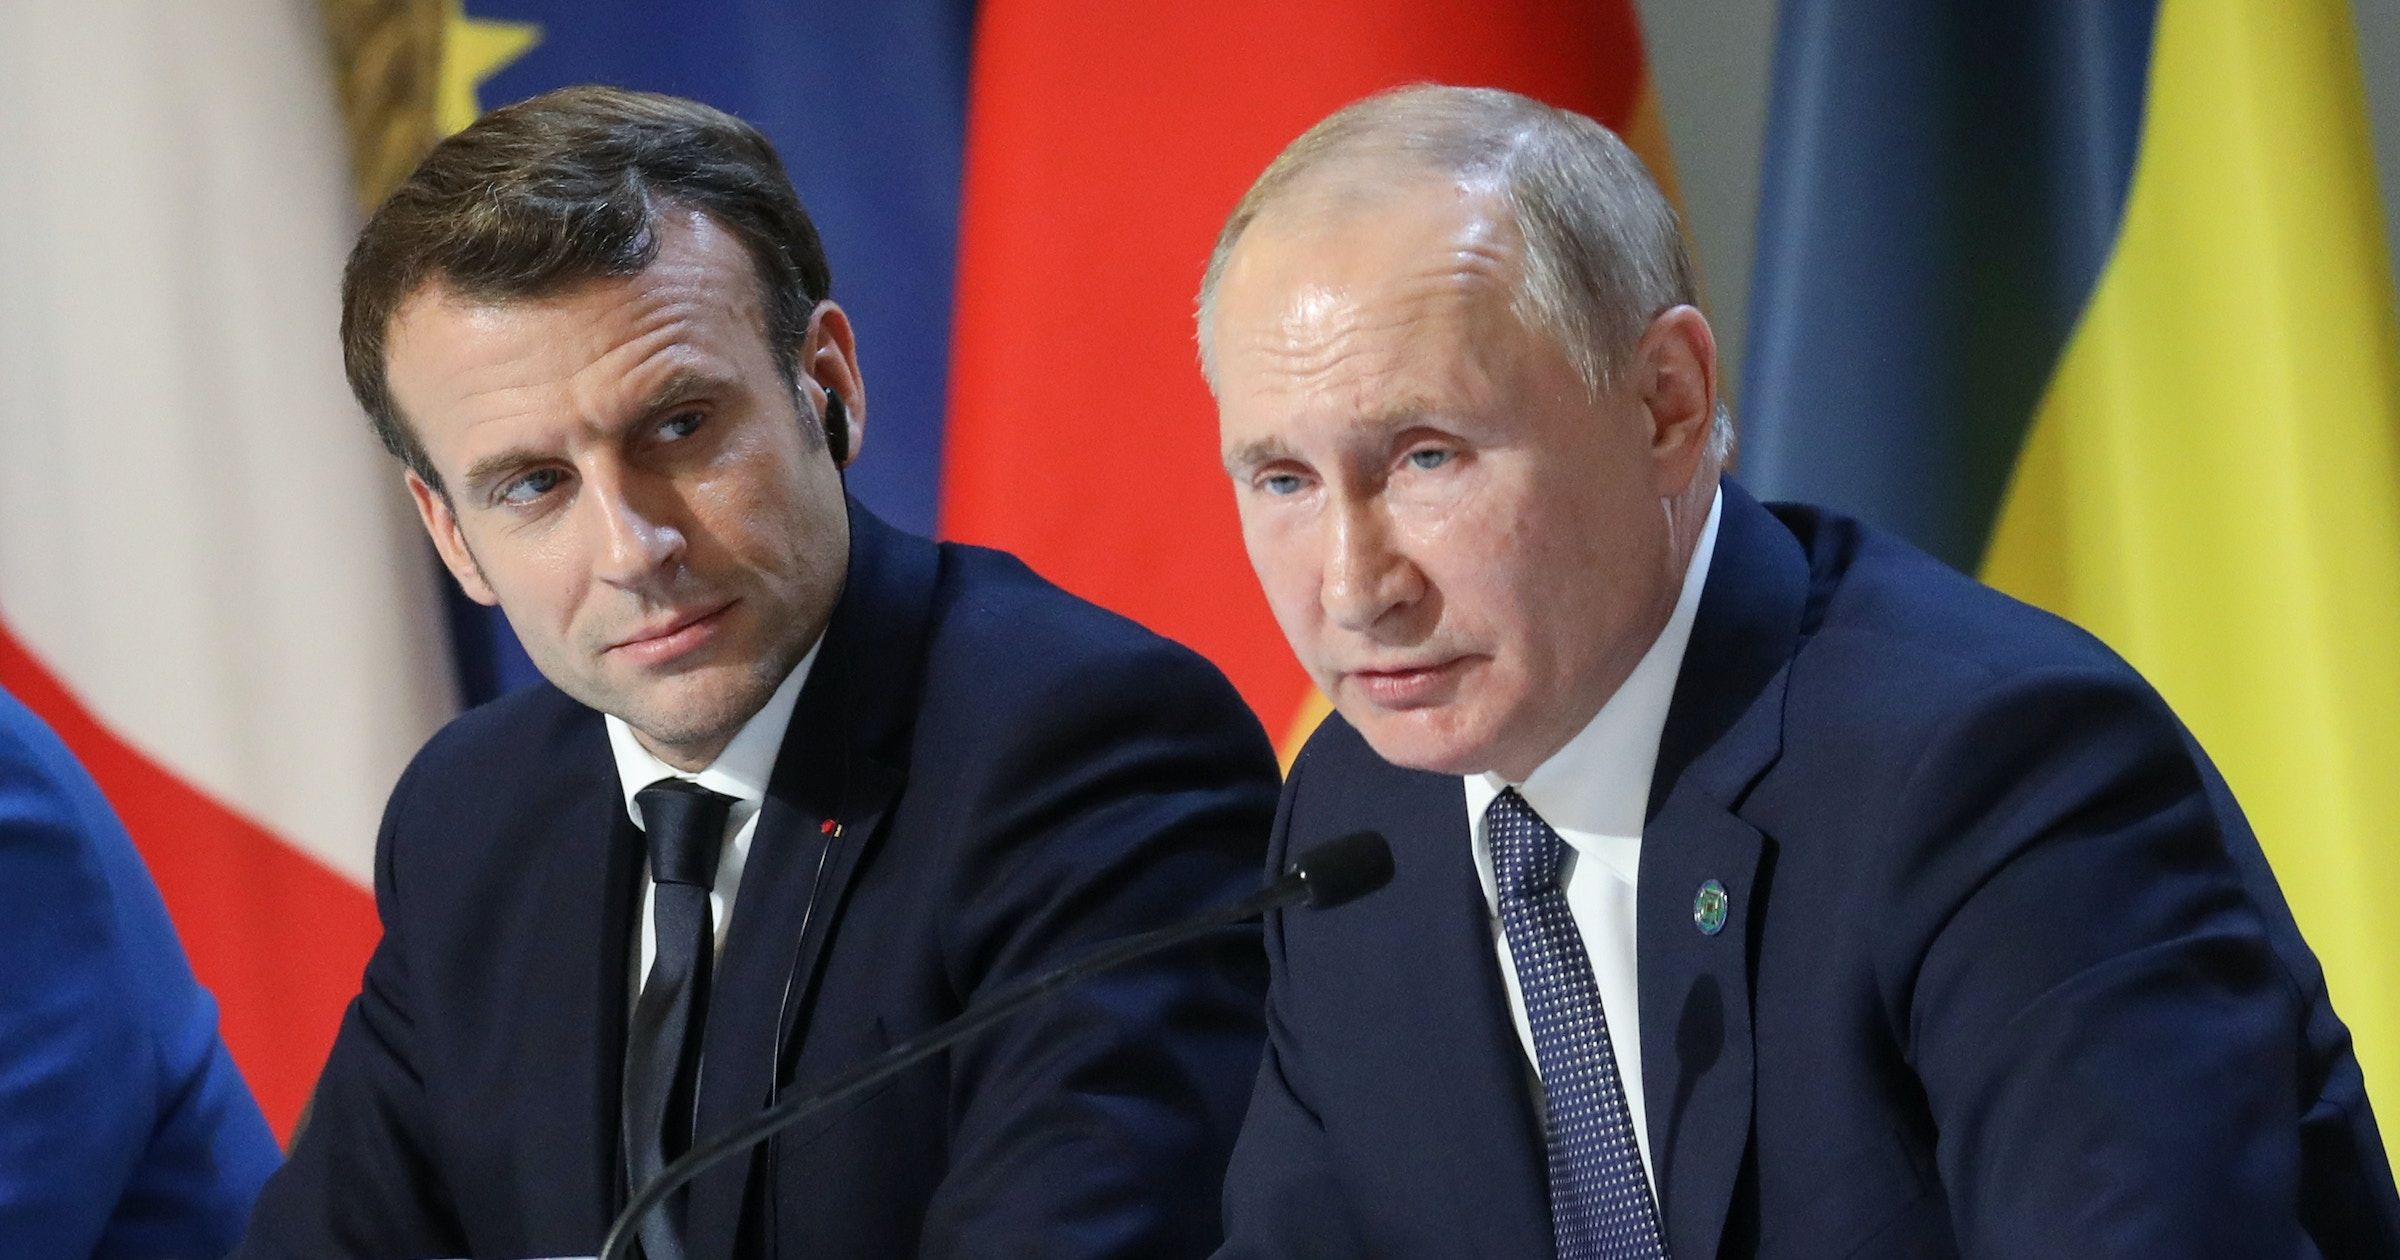 Эммануэль Макрон возмущен влиянием России на ЦАР и Мали